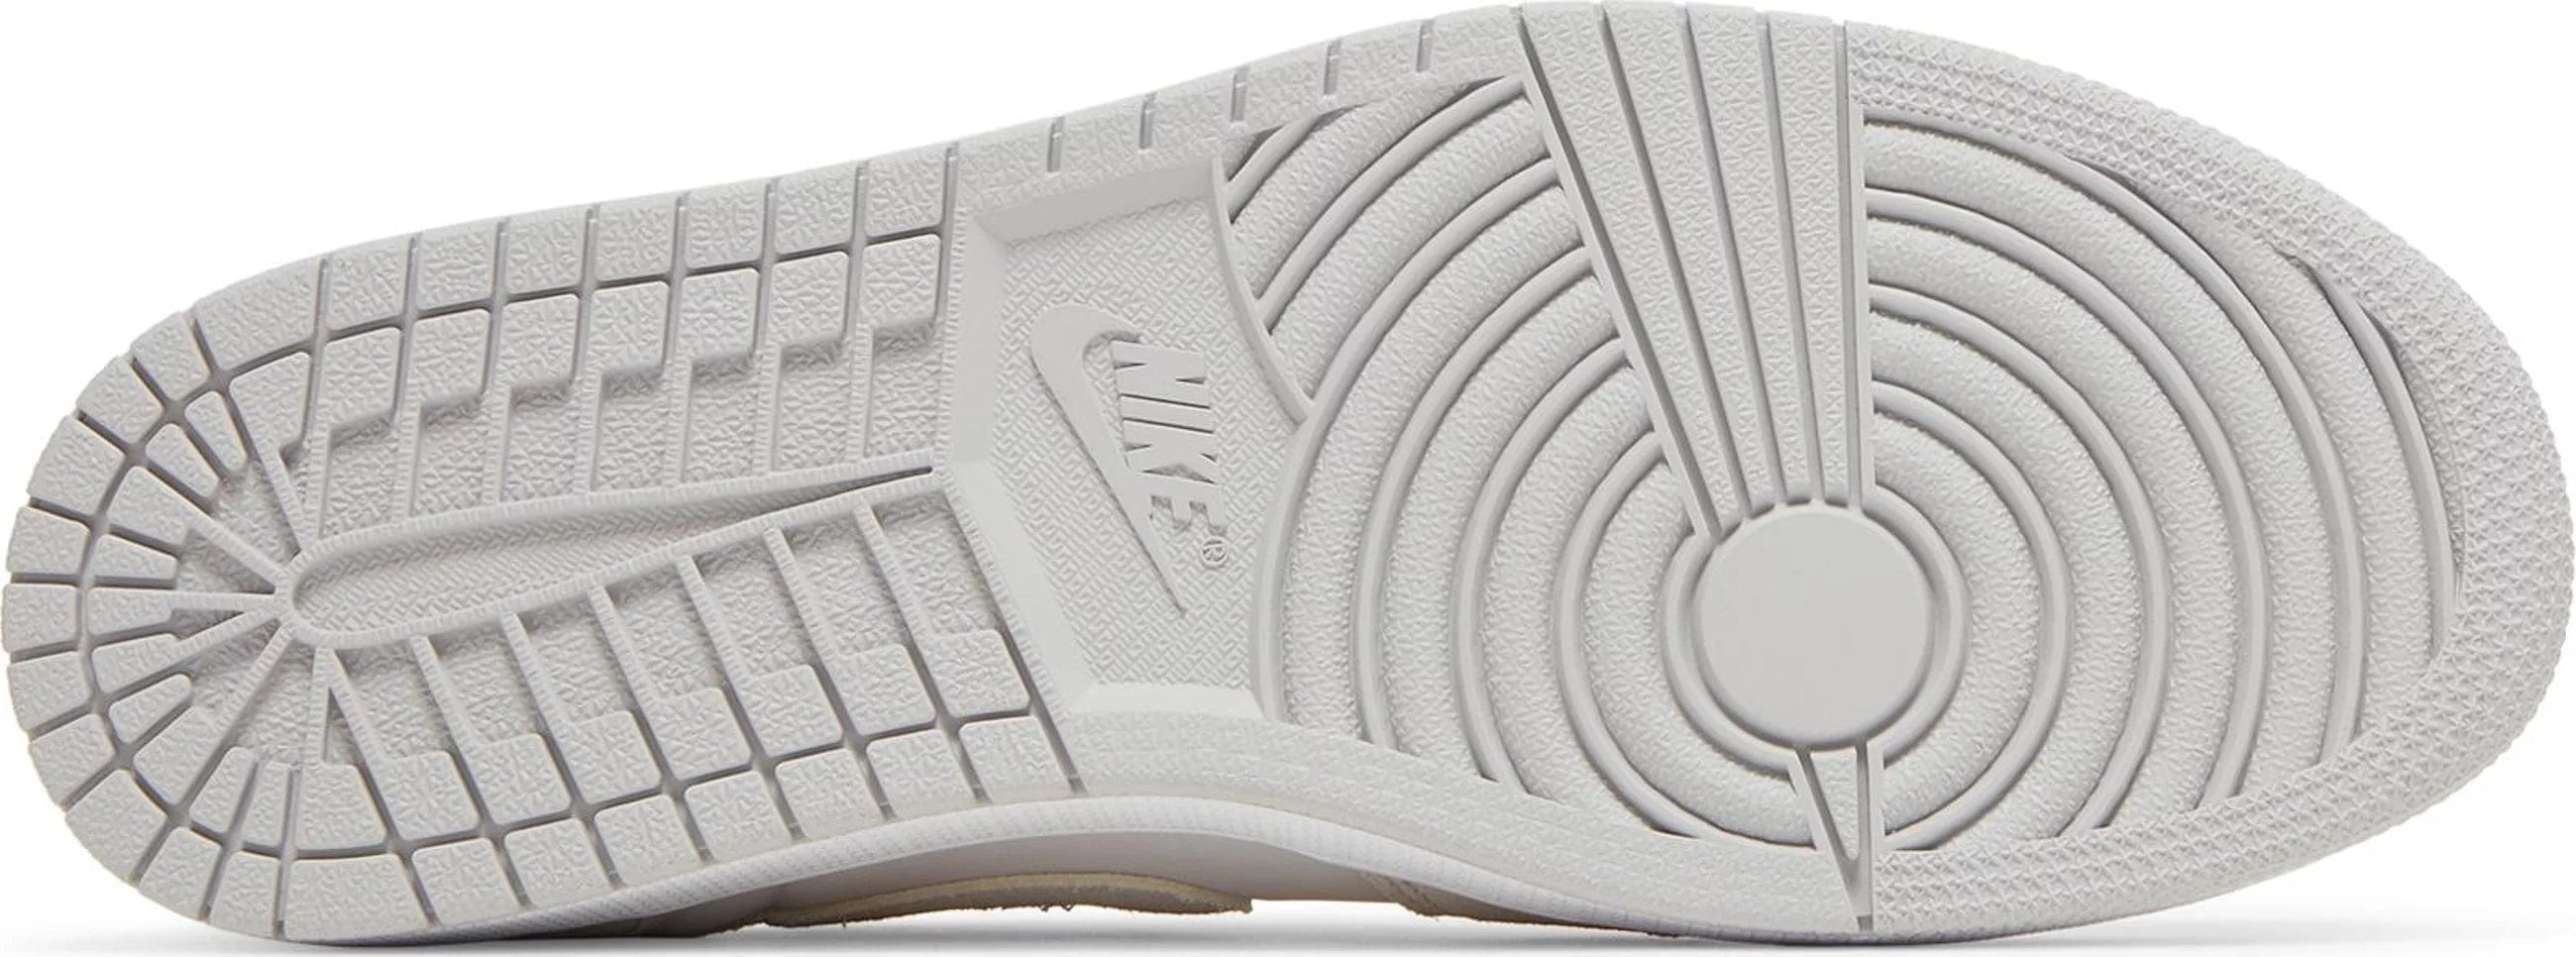 Nike Air Jordan 1 Low Inside Out Cream White Light Grey Men's